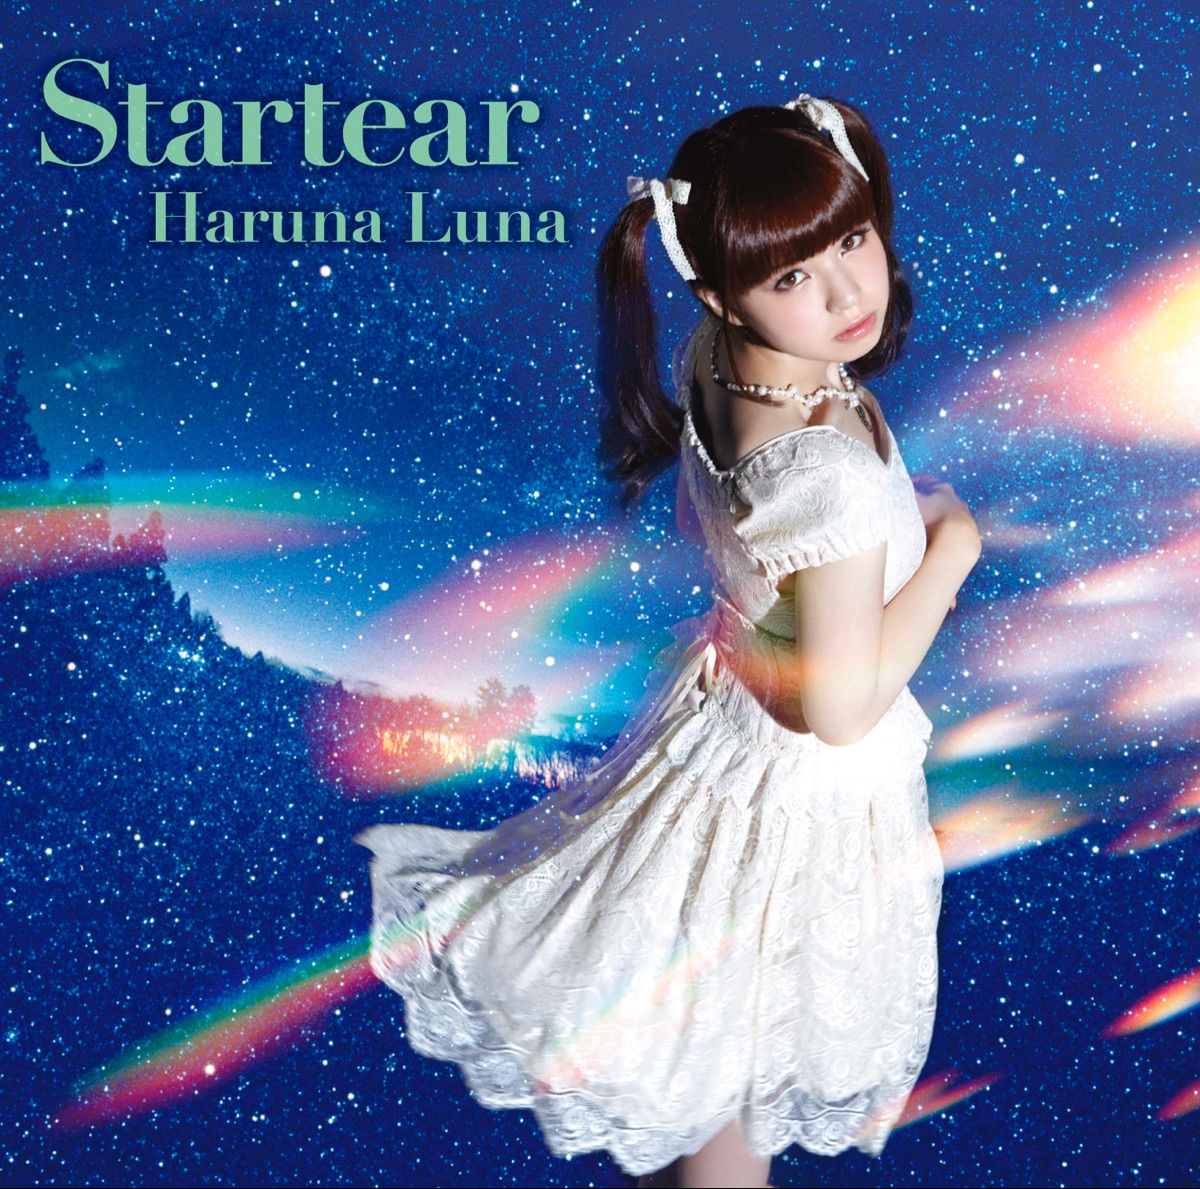 Cover art for『Luna Haruna - Startear』from the release『Startear